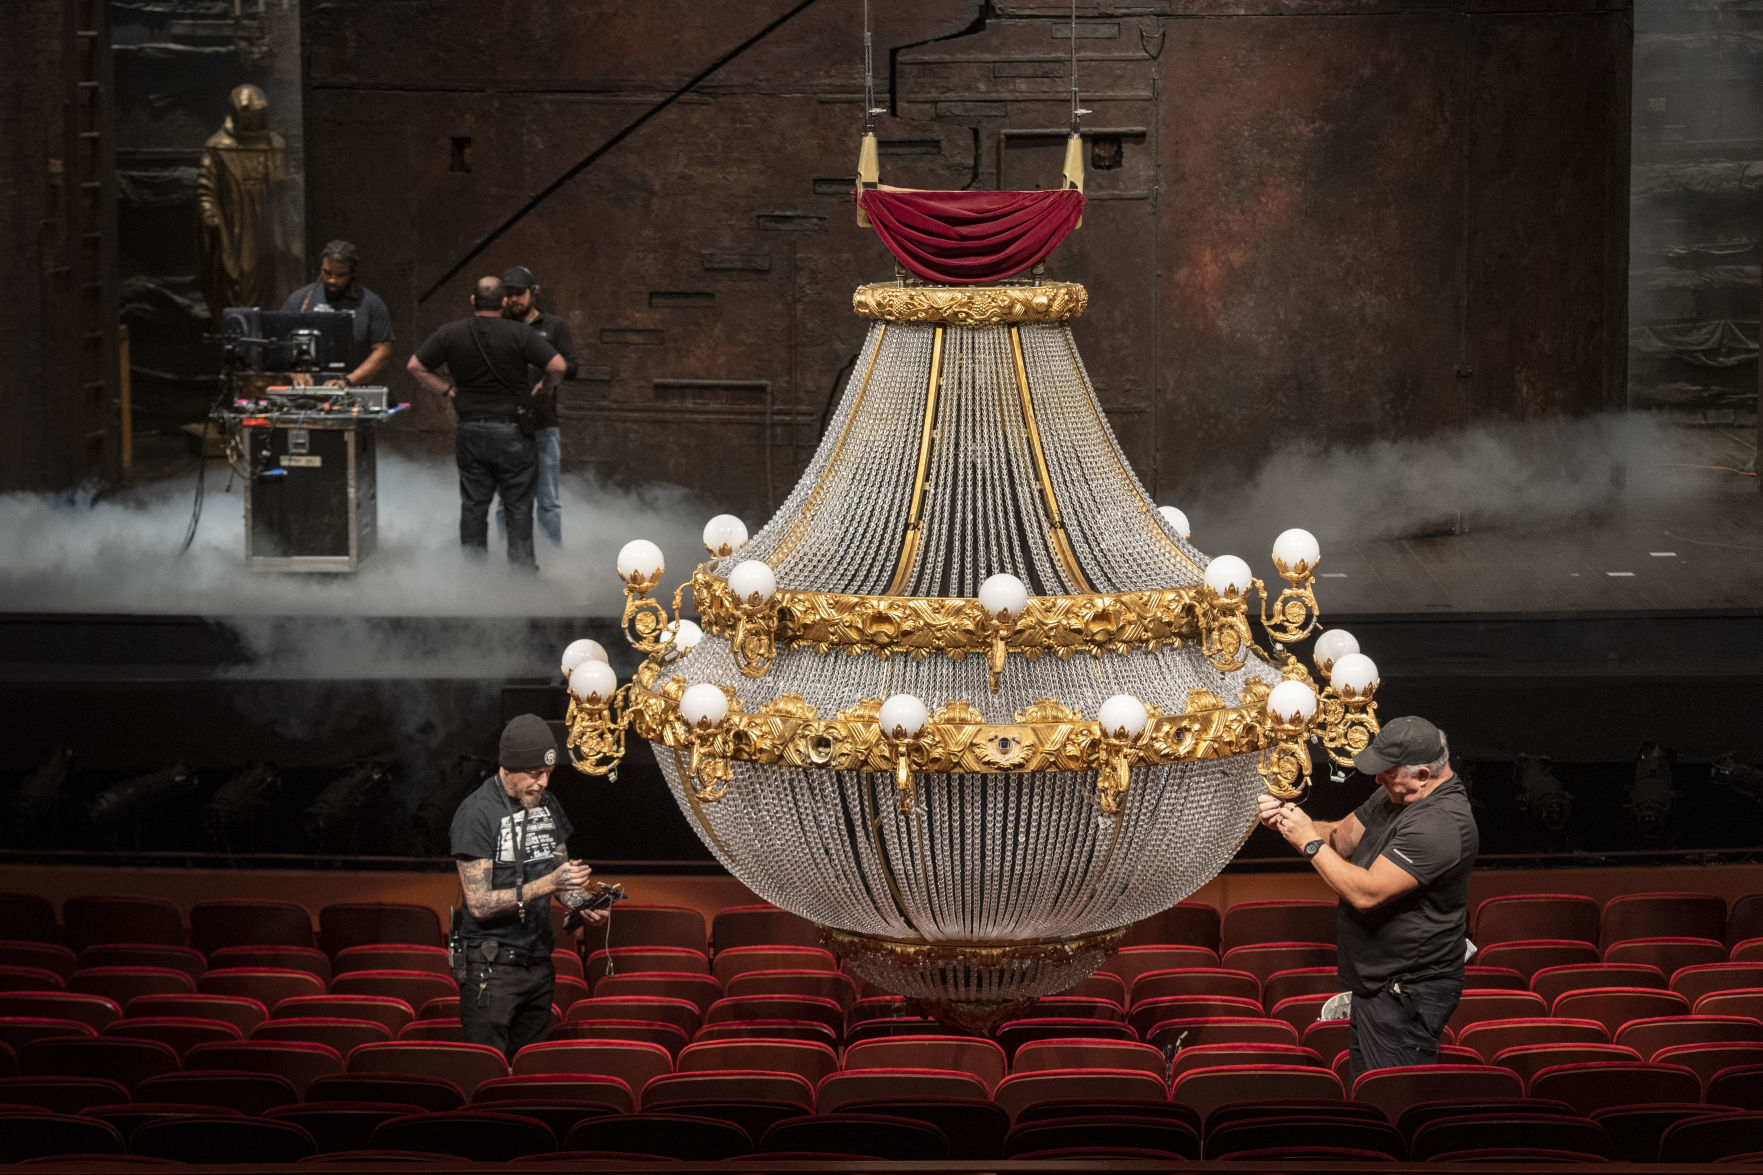 phantom of the opera chandelier